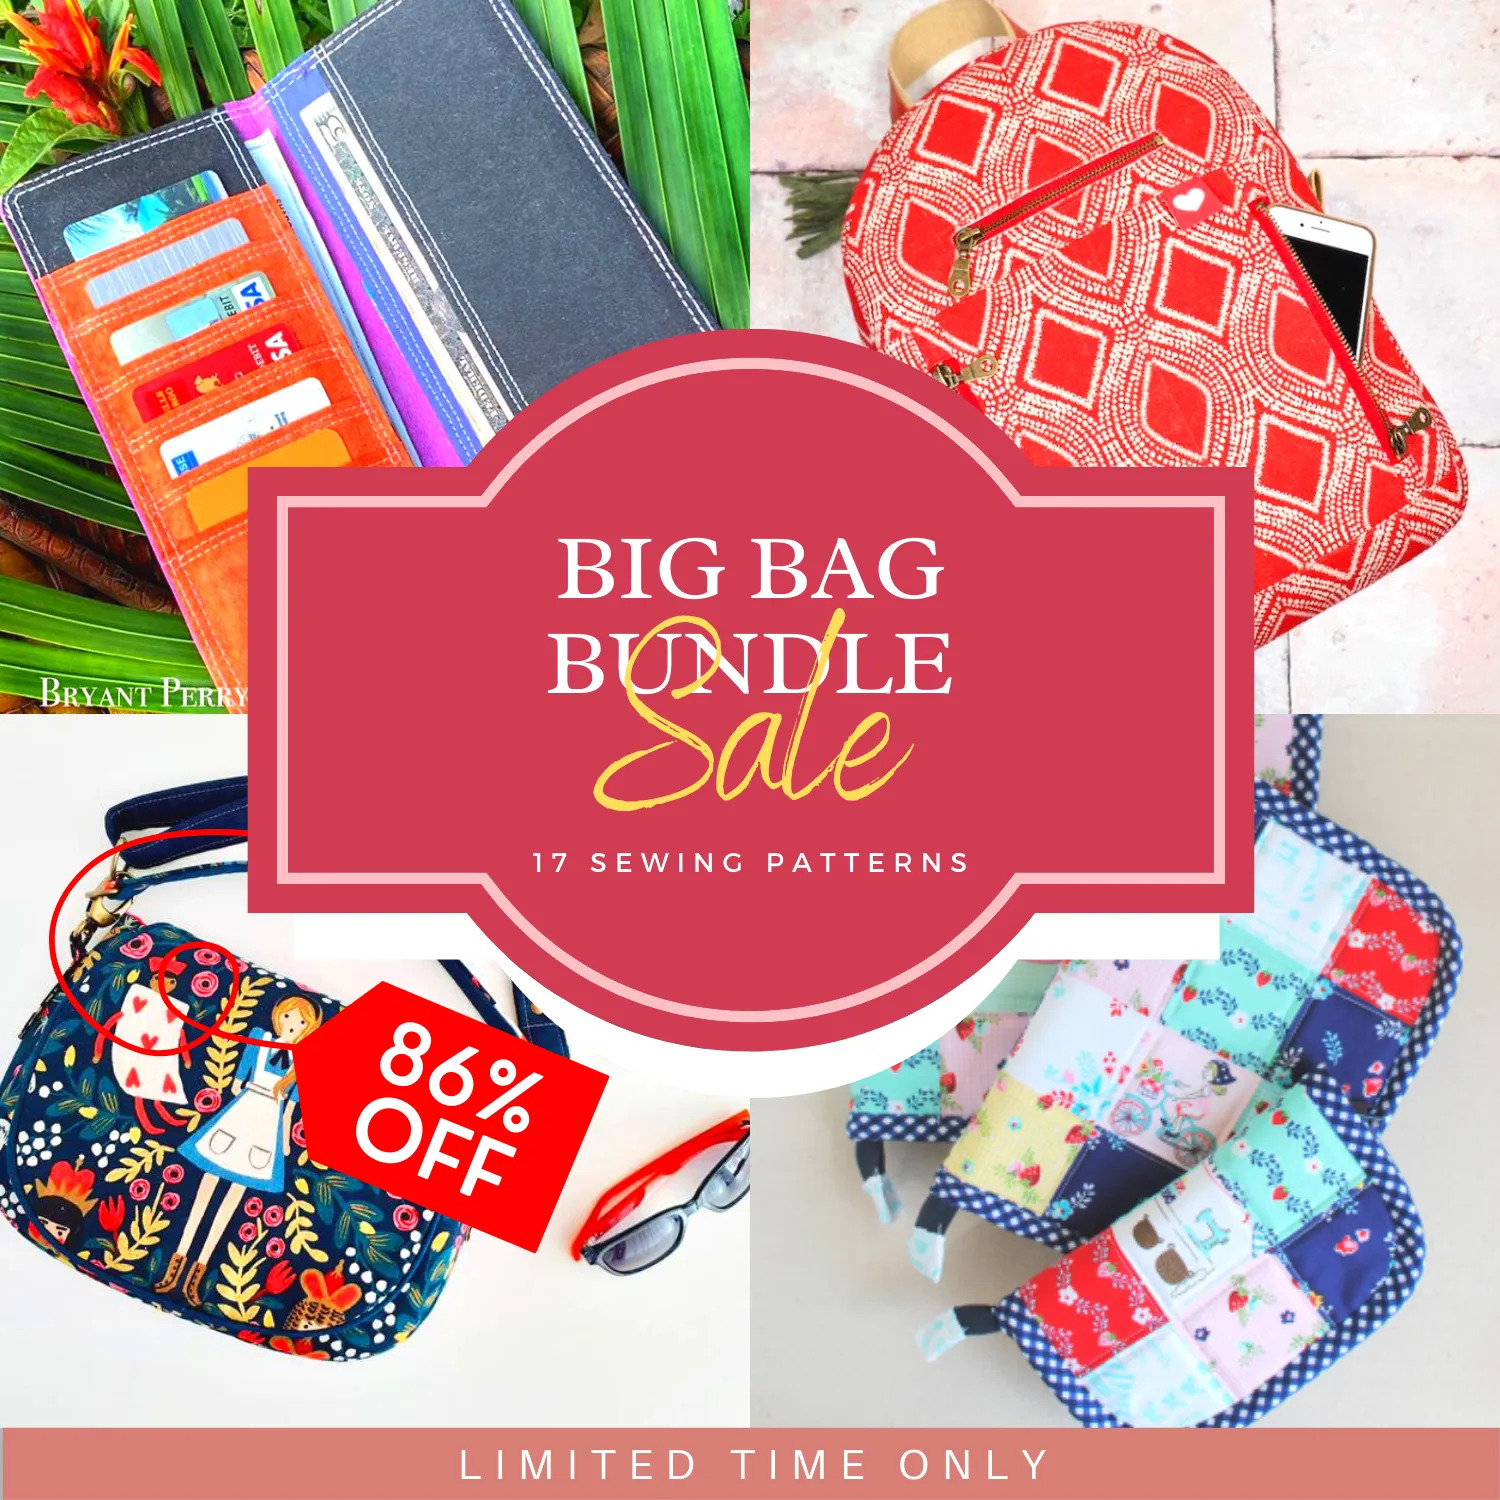 Big Bag Bundle Sale - limited time deal - Sew Modern Bags